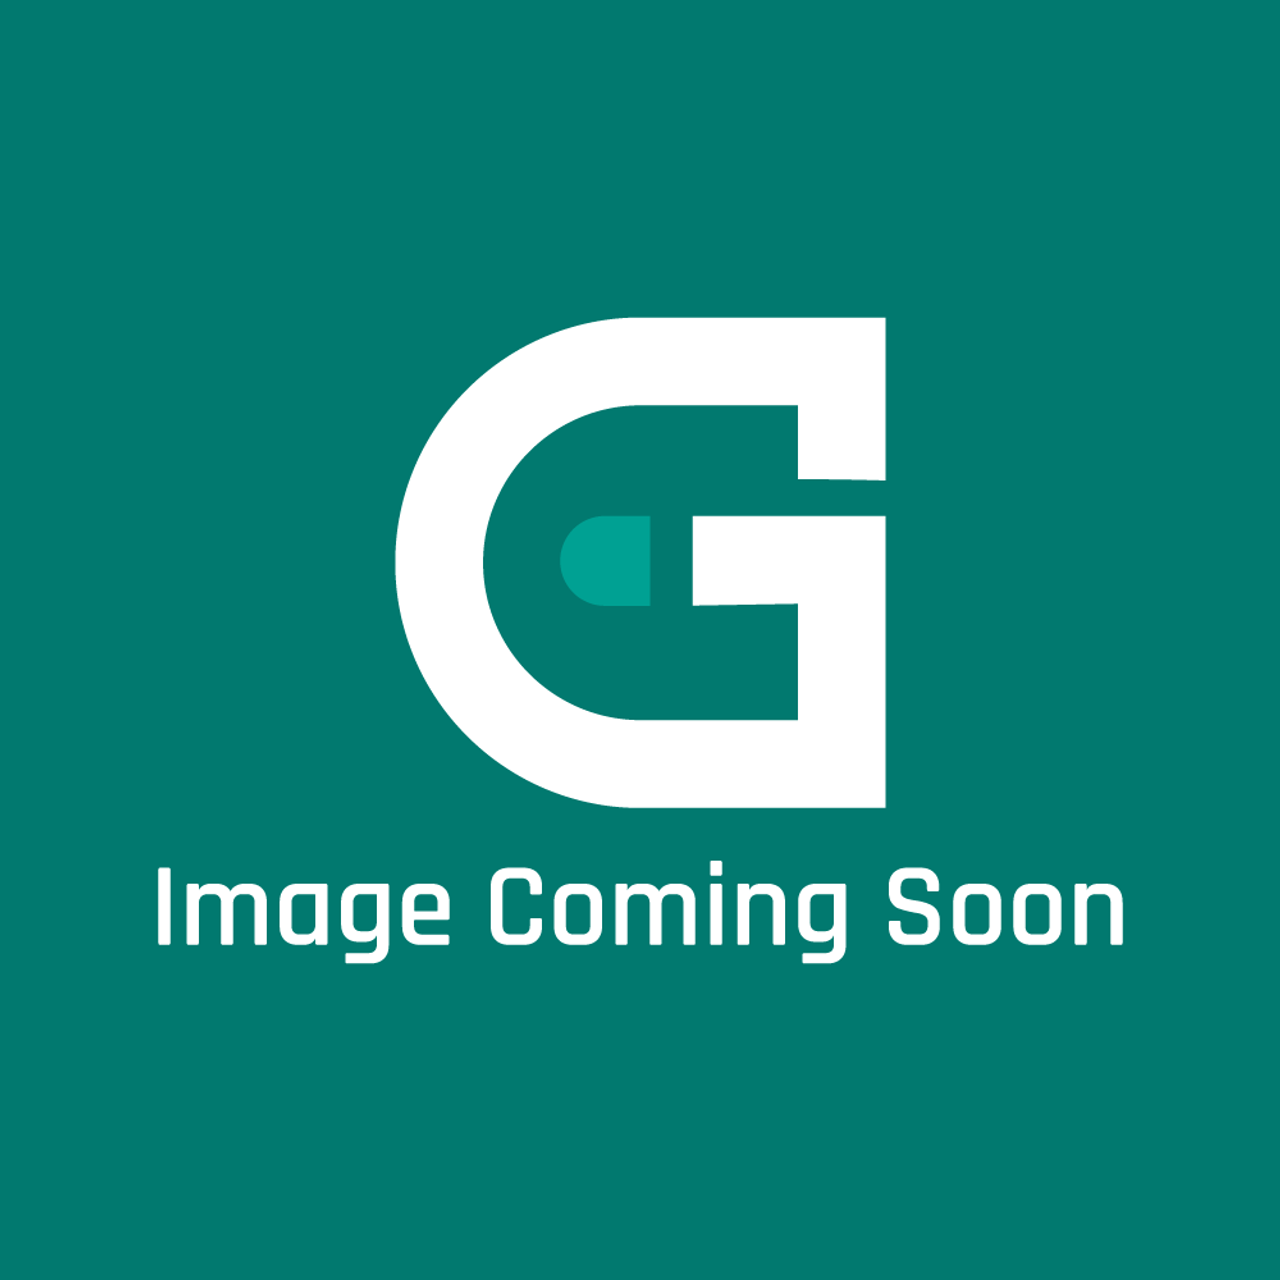 AGA Marvel KPAN500317 - Hotspom5 X 8 Pan Hd Taptite (Nibs) - Image Coming Soon!